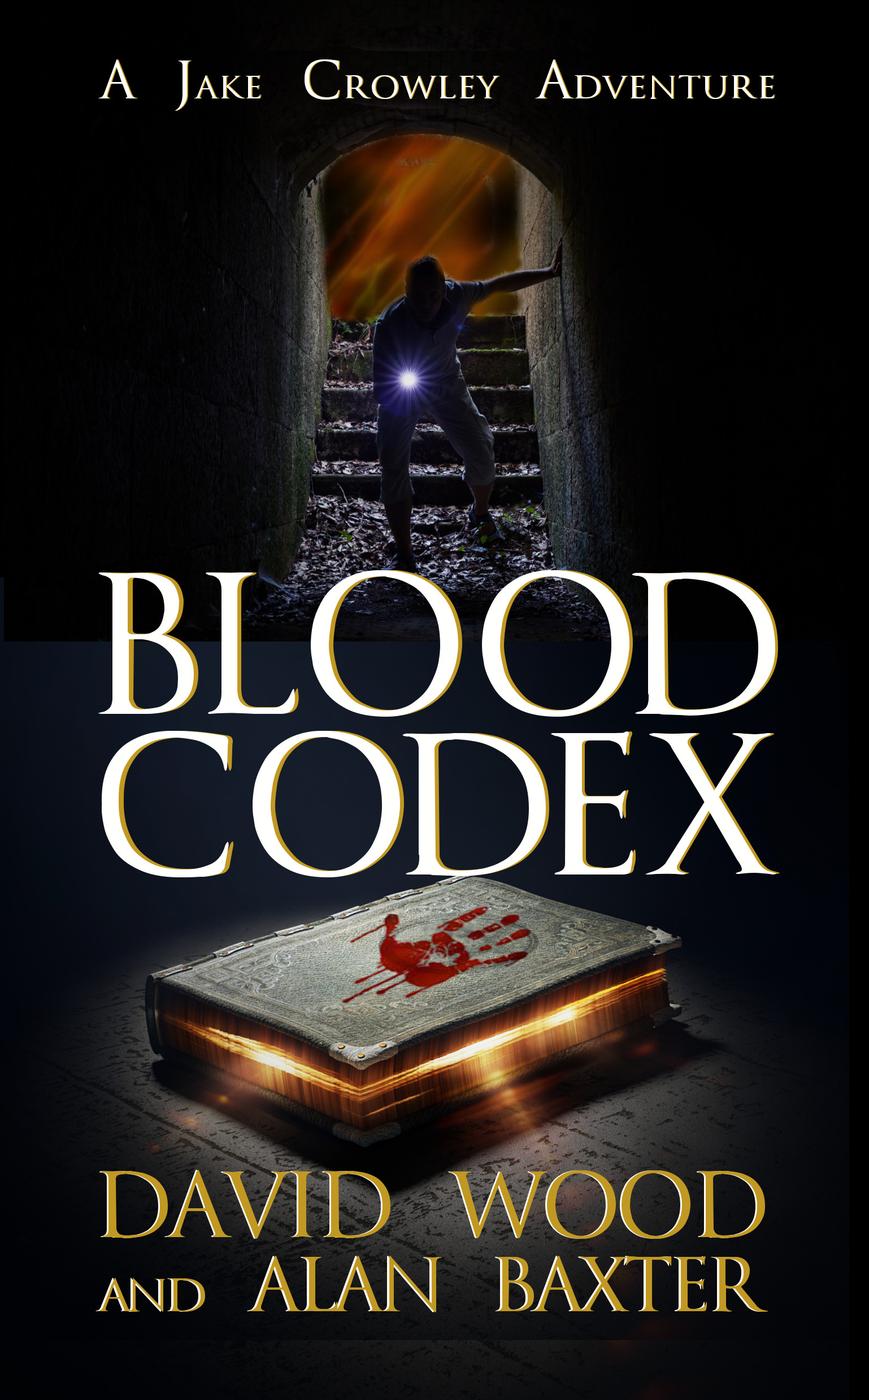 Blood Codex